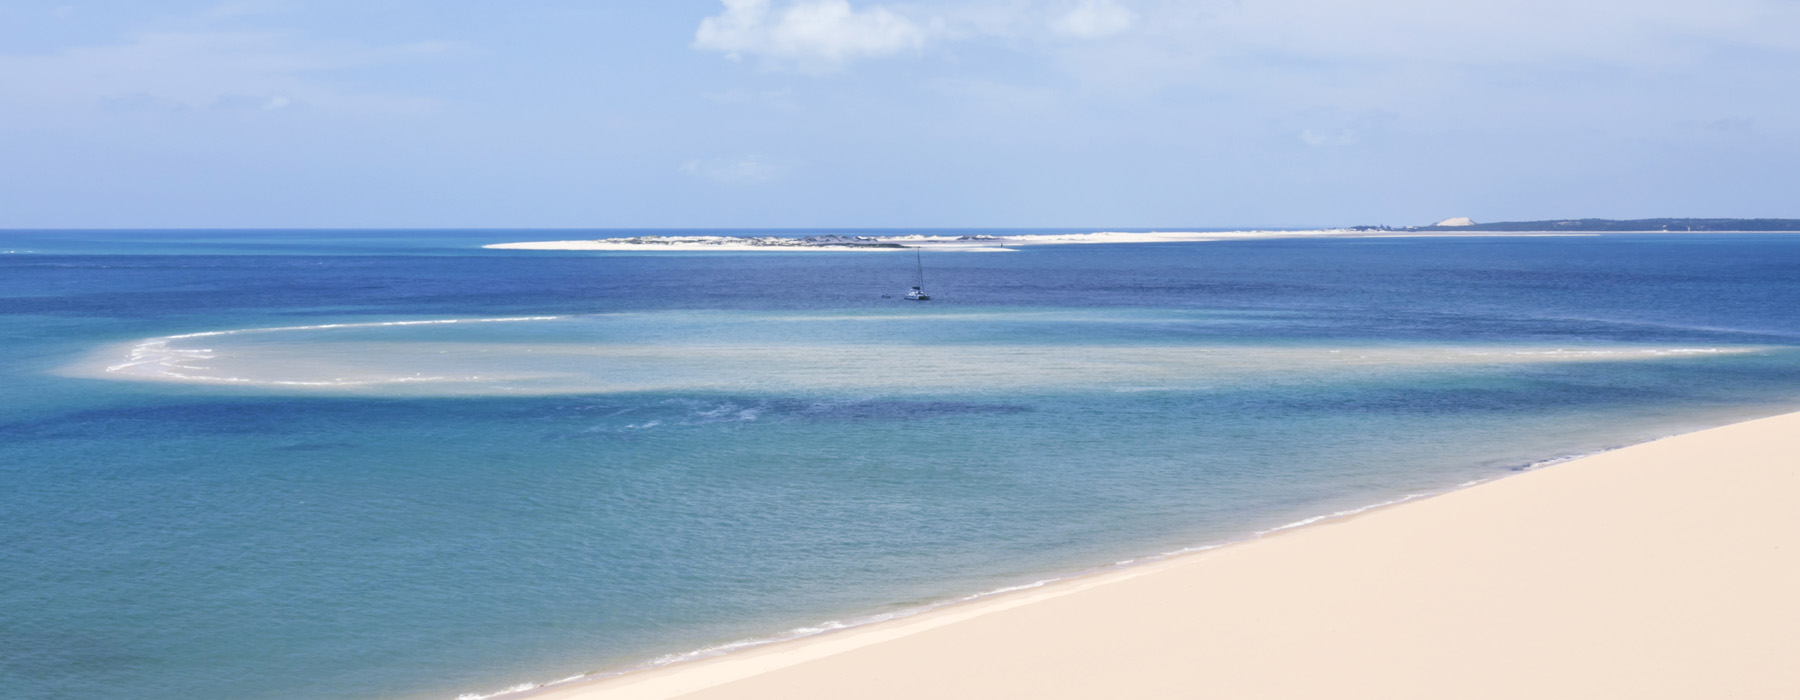 Southern Mozambique & Bazaruto Archipelago<br class="hidden-md hidden-lg" /> Holidays